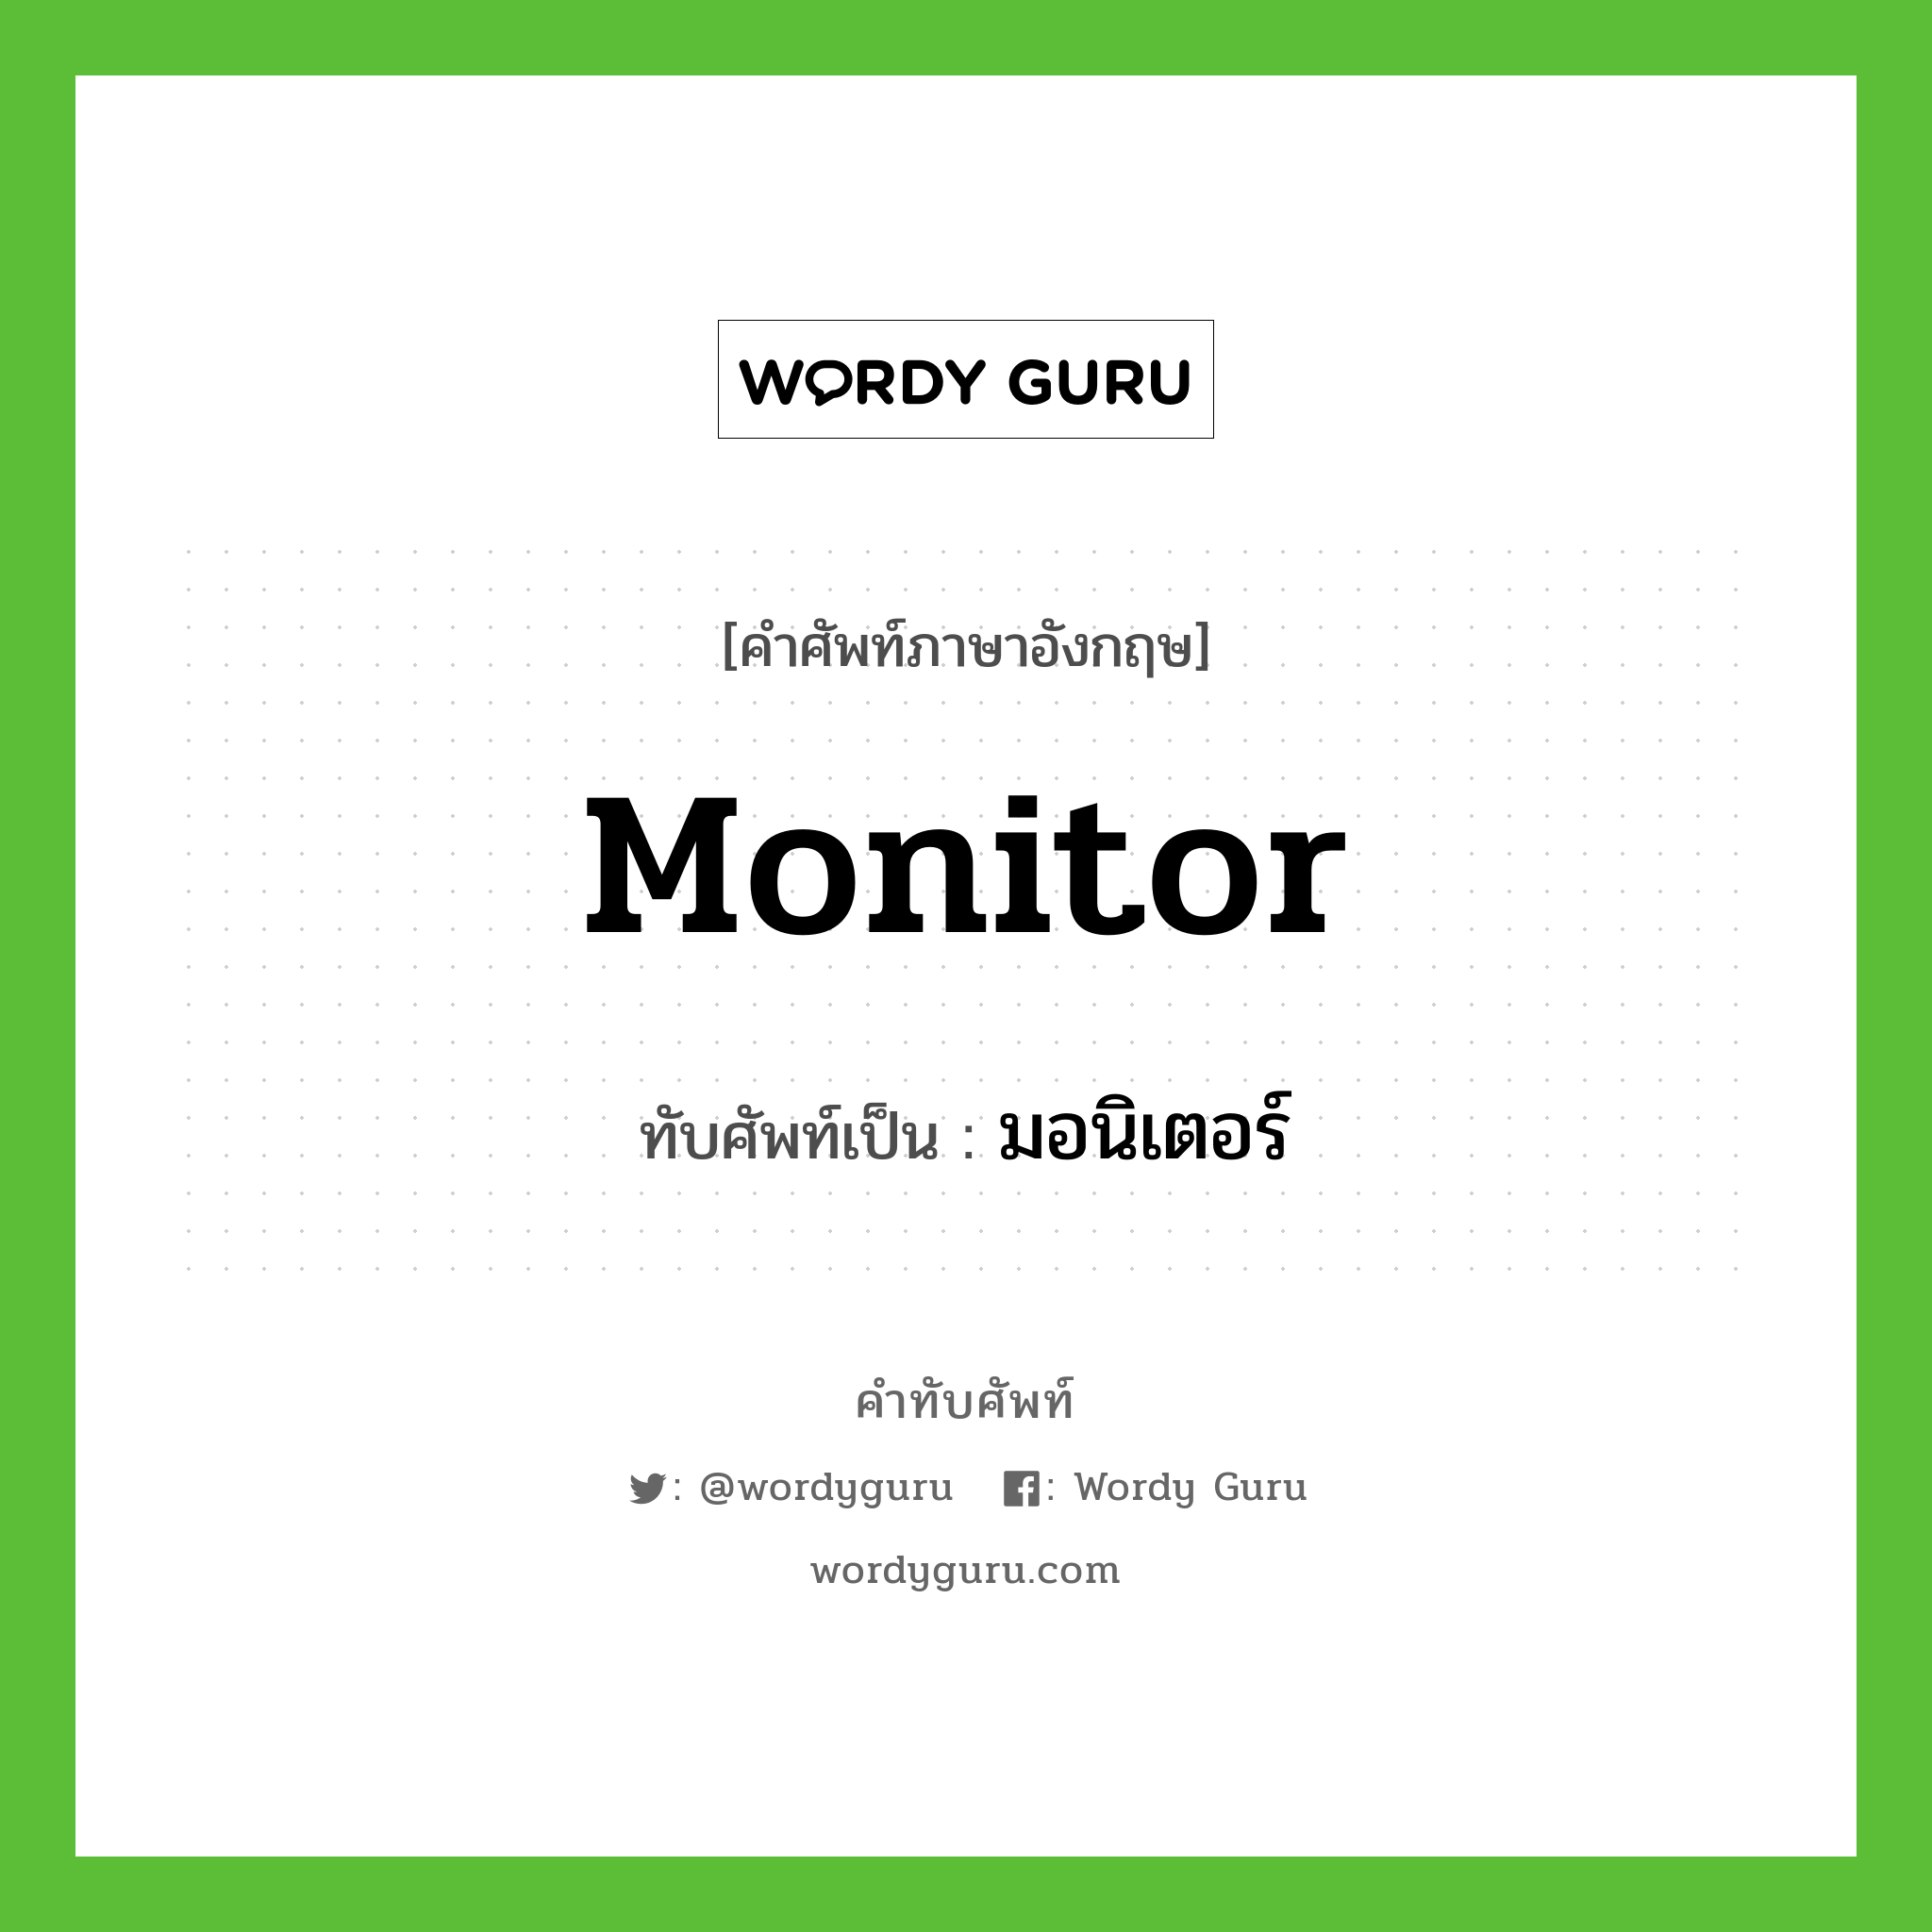 monitor เขียนเป็นคำไทยว่าอะไร?, คำศัพท์ภาษาอังกฤษ monitor ทับศัพท์เป็น มอนิเตอร์